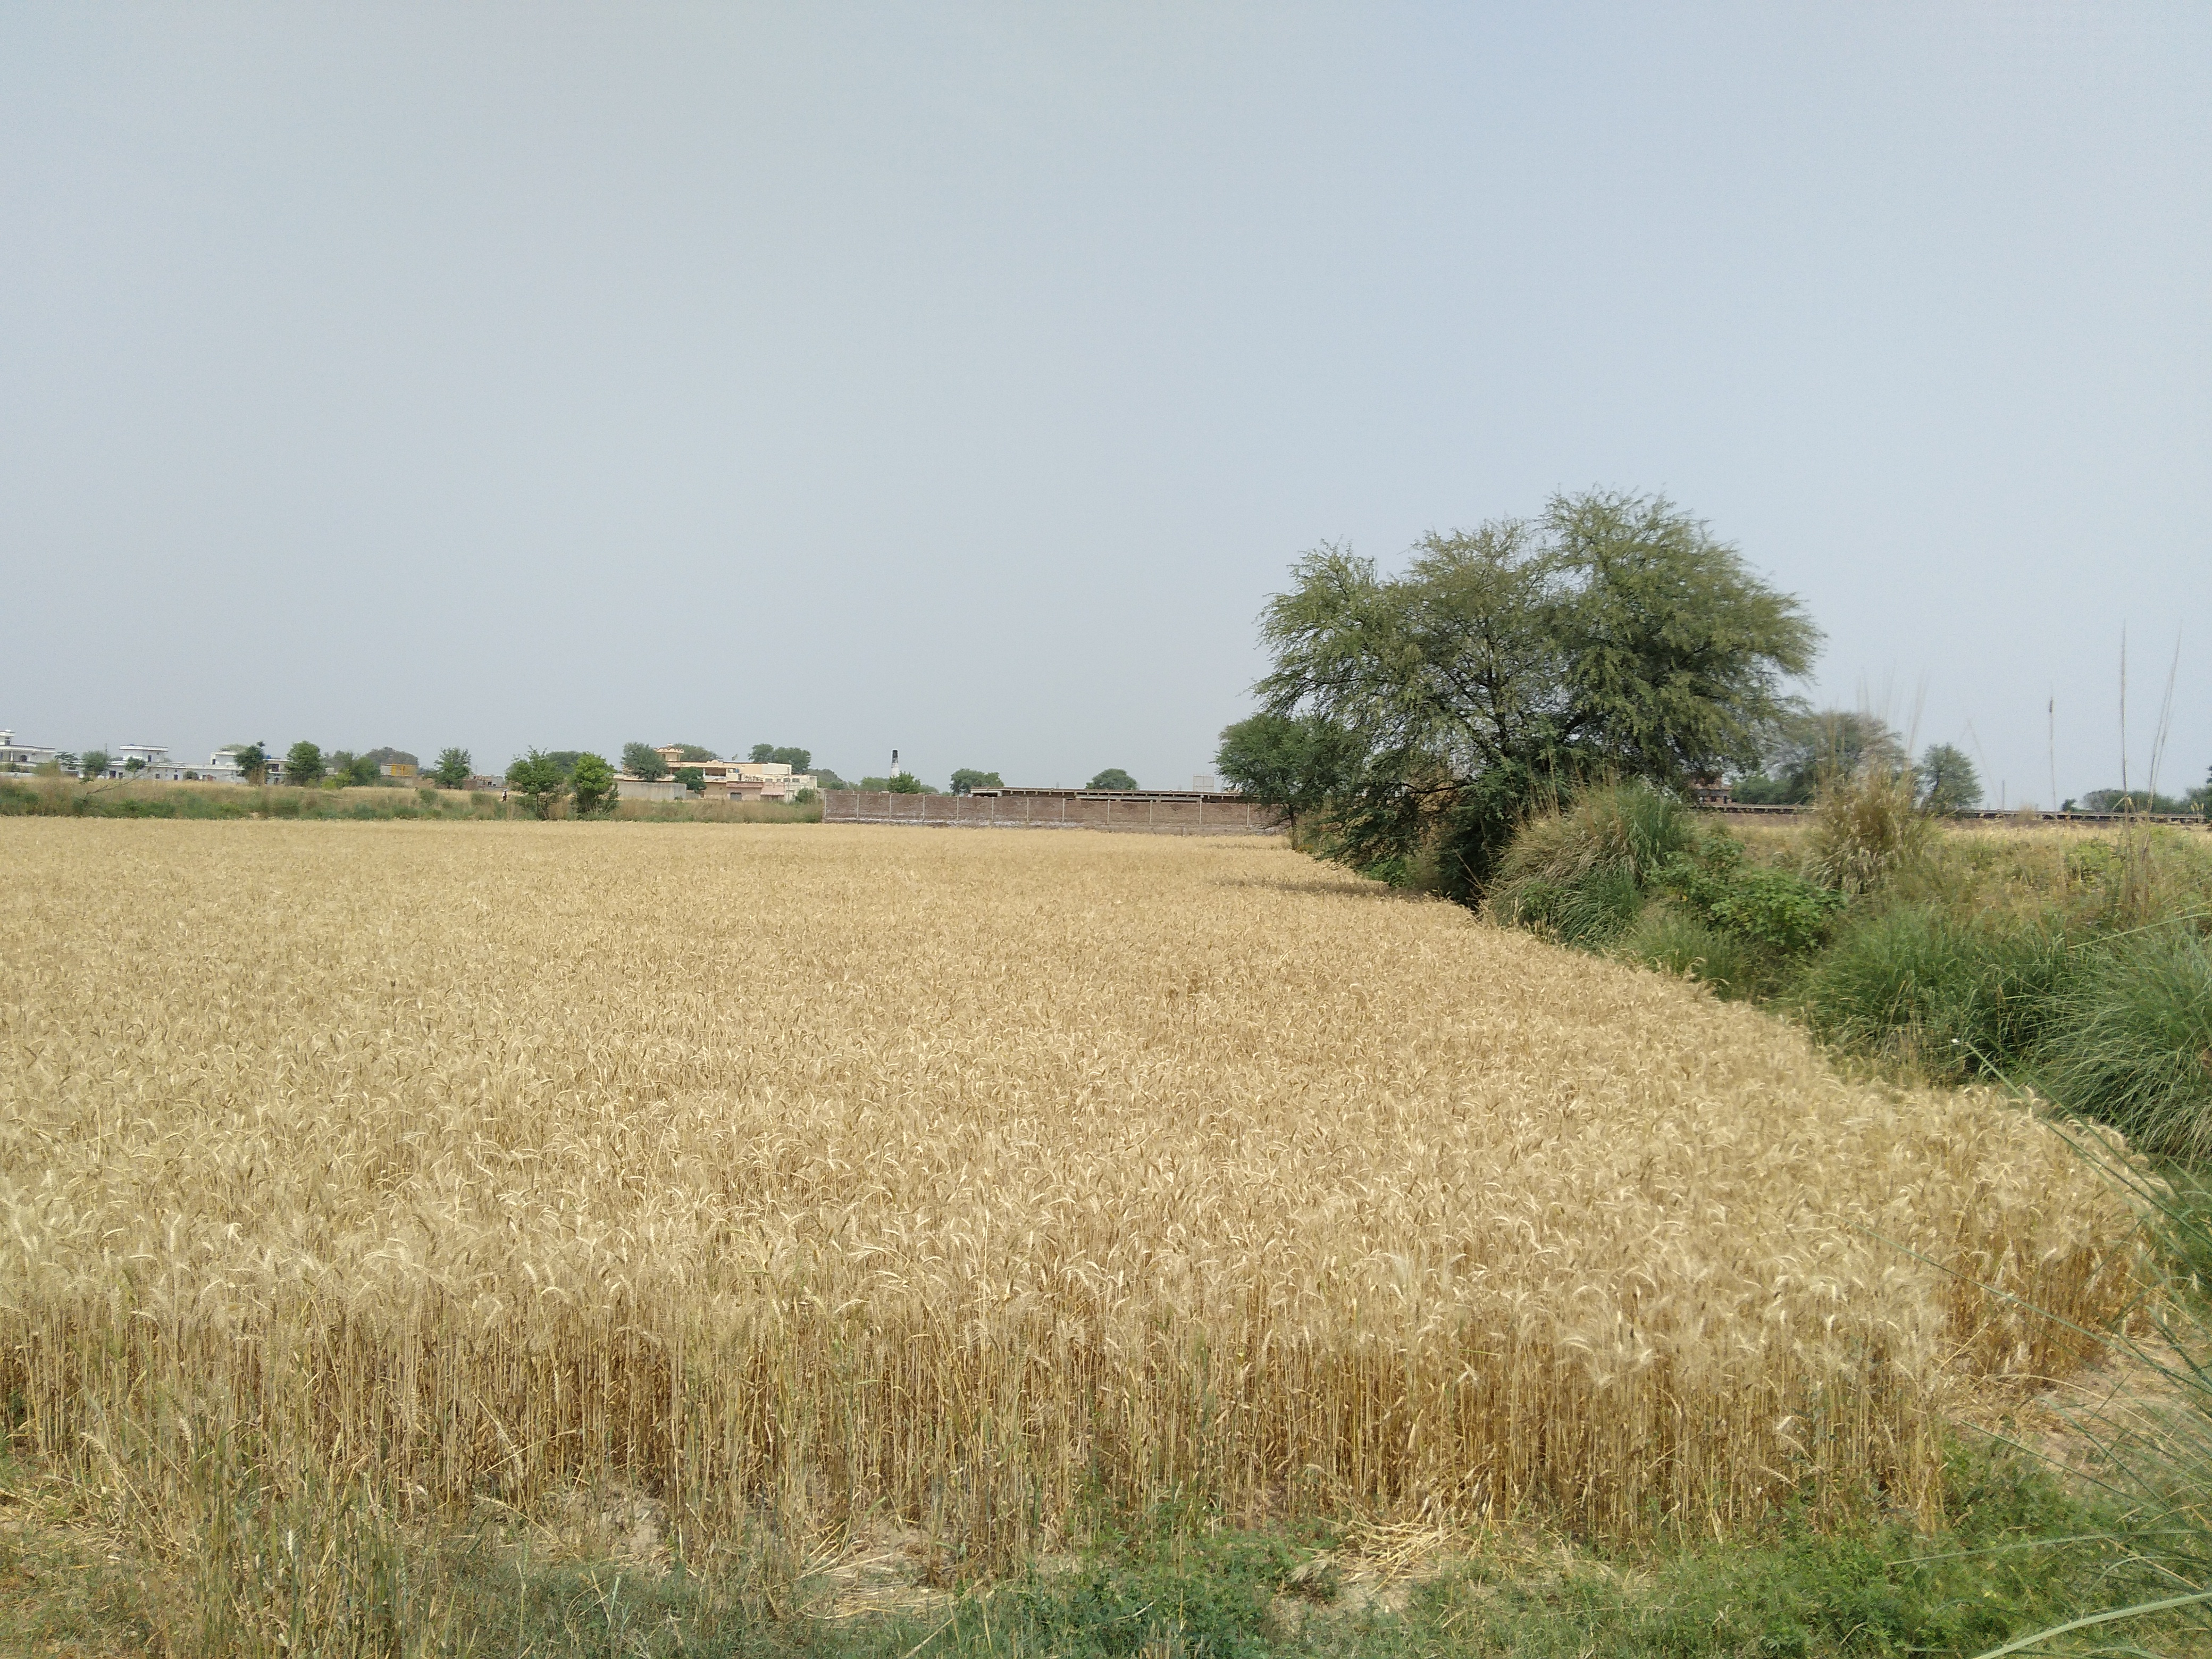 Bhagwal wheat field